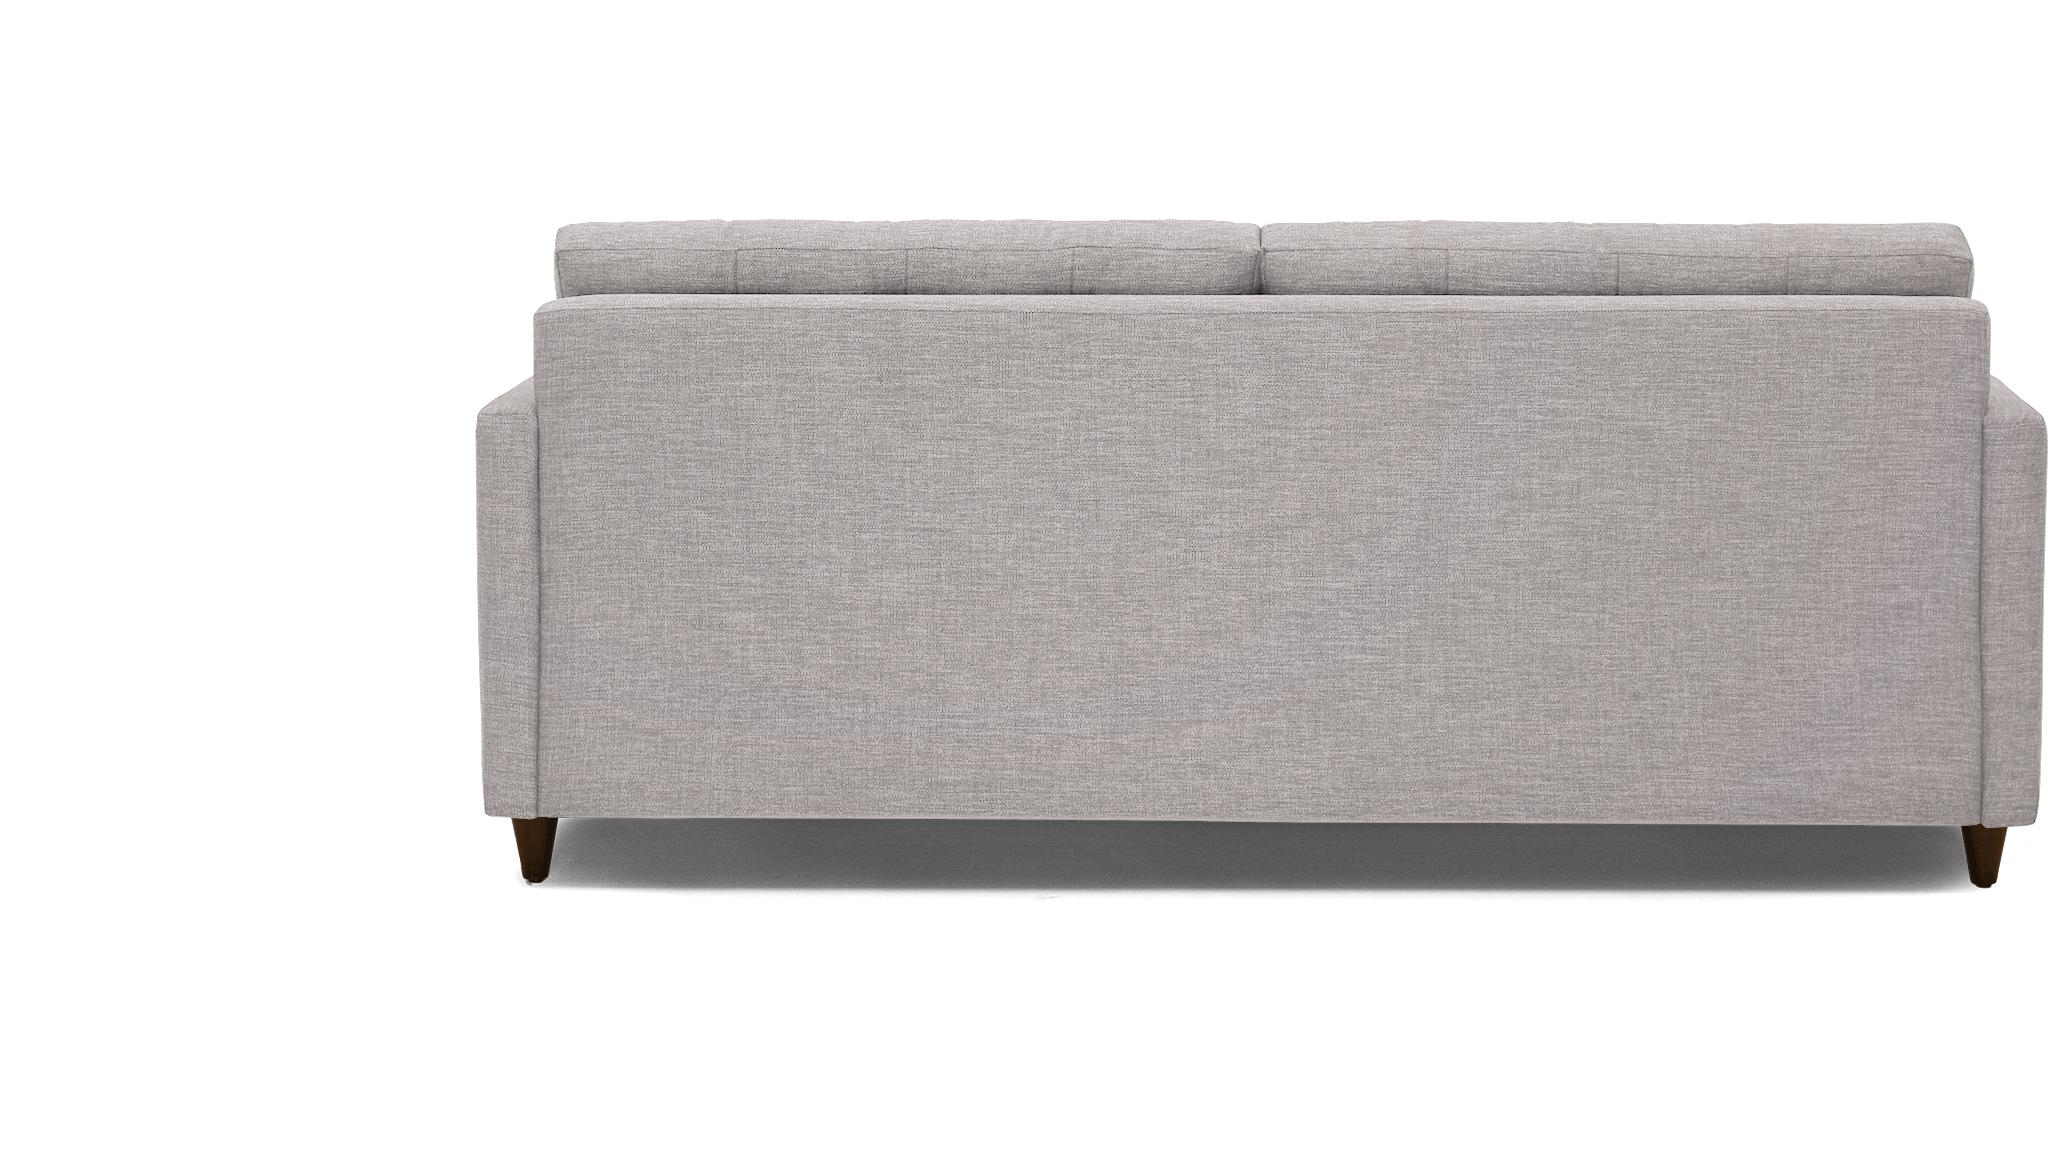 Purple Eliot Mid Century Modern Sleeper Sofa - Sunbrella Premier Wisteria - Mocha - Standard Foam - Image 4